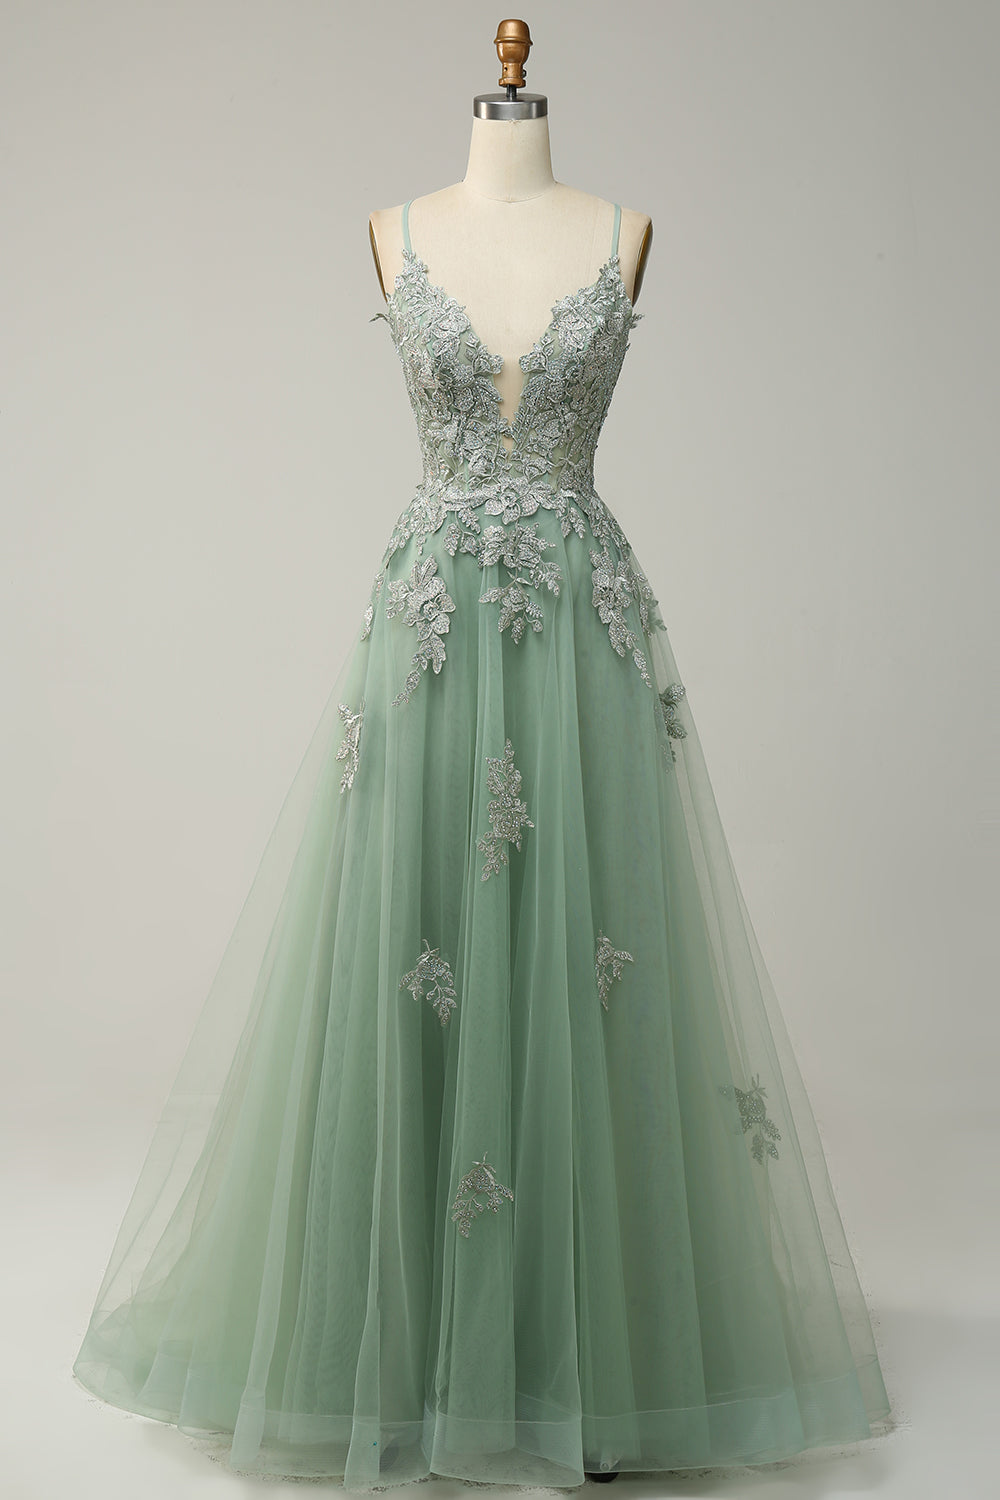 Nicole Jolies Collection 2016 — Colored Wedding Dresses | Wedding Inspirasi